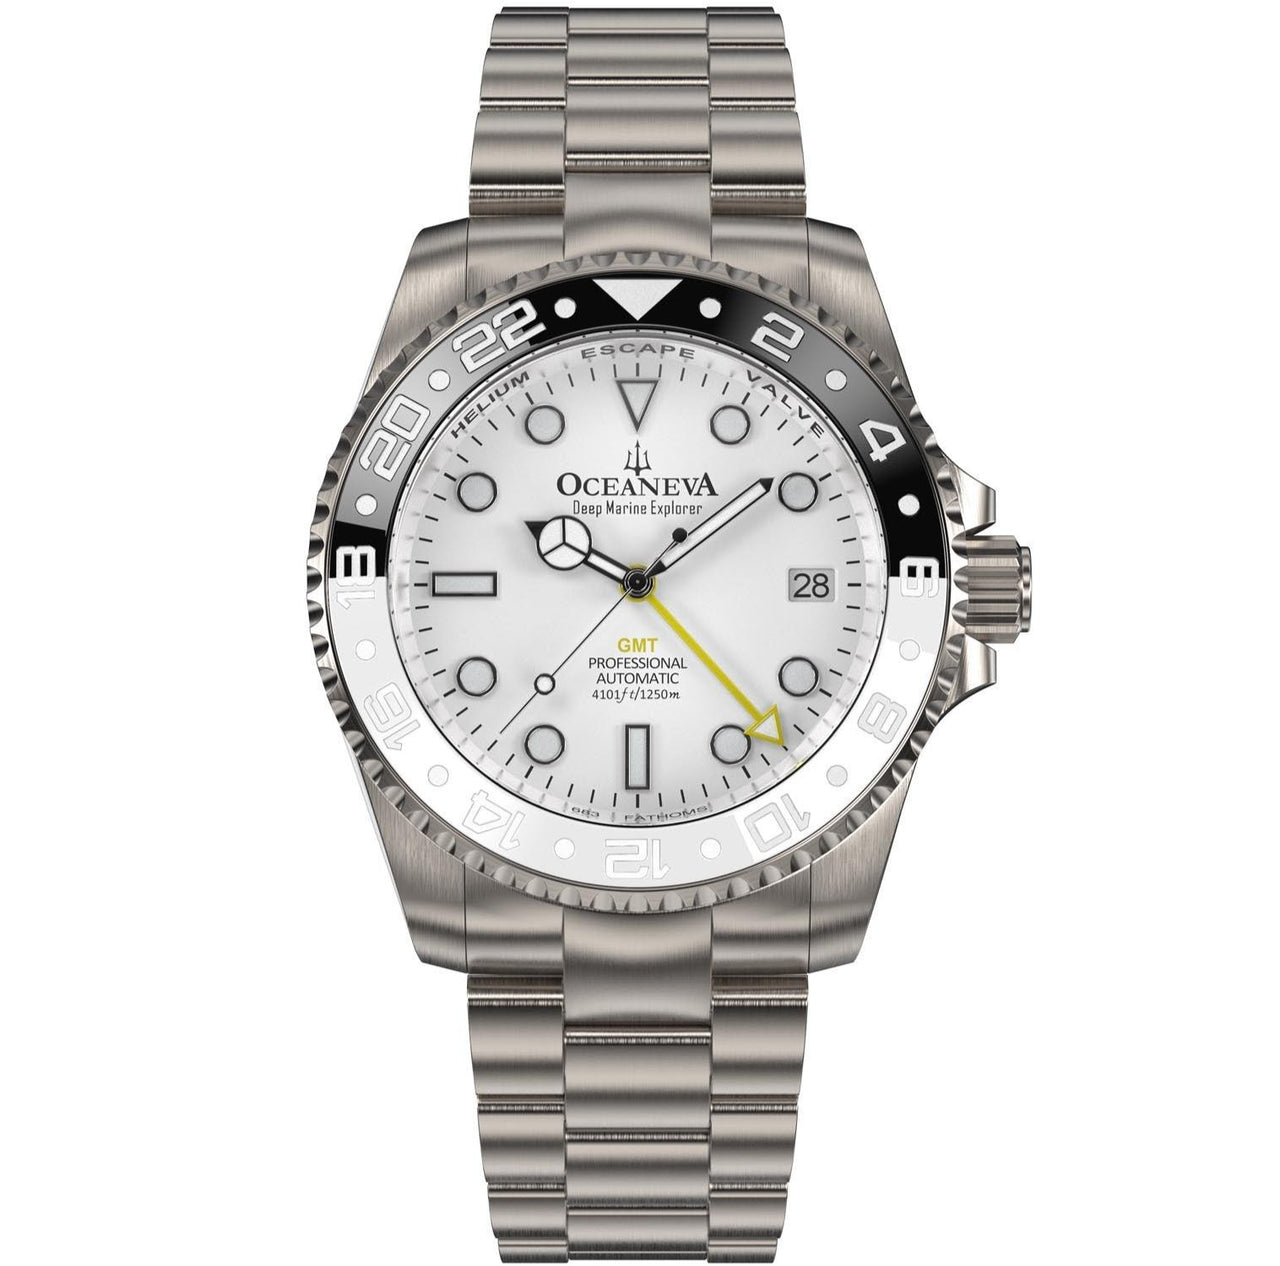 Oceaneva Men's GMT TITANIUM Automatic Deep Marine Explorer 1250M White & Black Ceramic Bezel Watch - WH.BK.NHCR.WH.GMT.TT automatic GMT watch, titanium automatic watch, Titanium GMT, Titanium watches, Titanum GMT watch